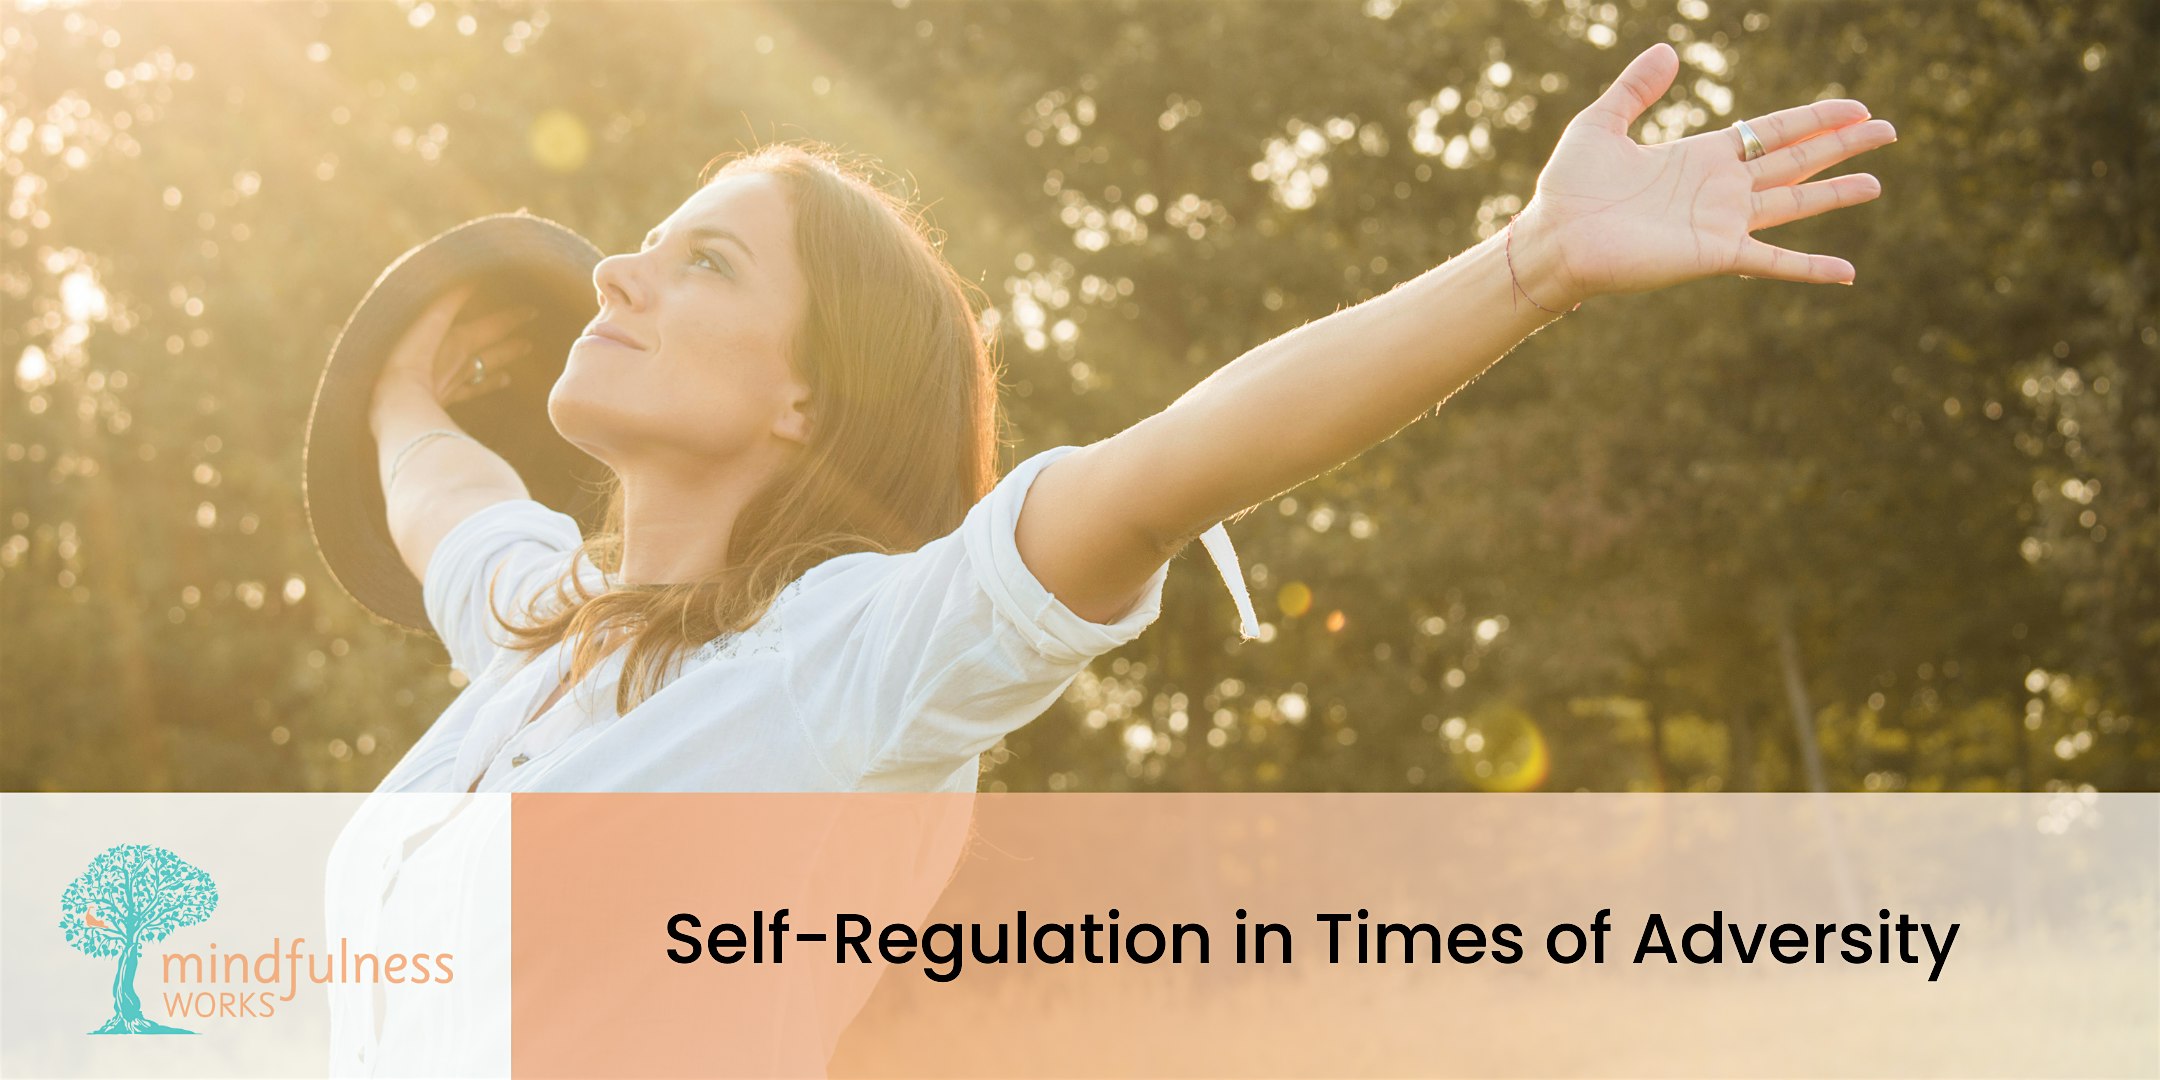 Self-Regulation in Times of Adversity